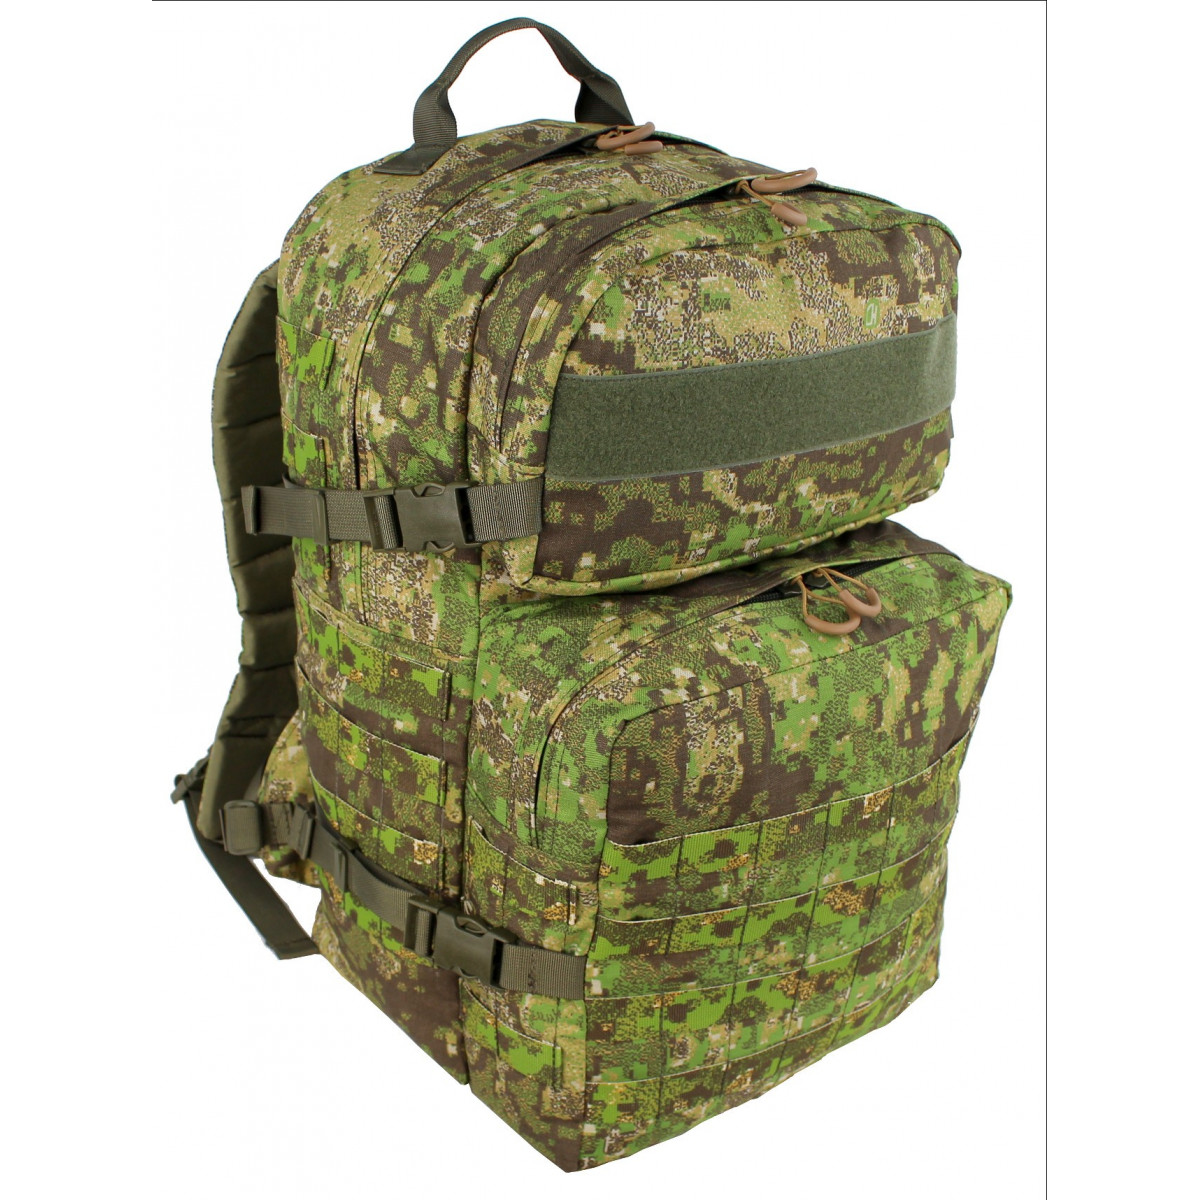 Operation backpack standard